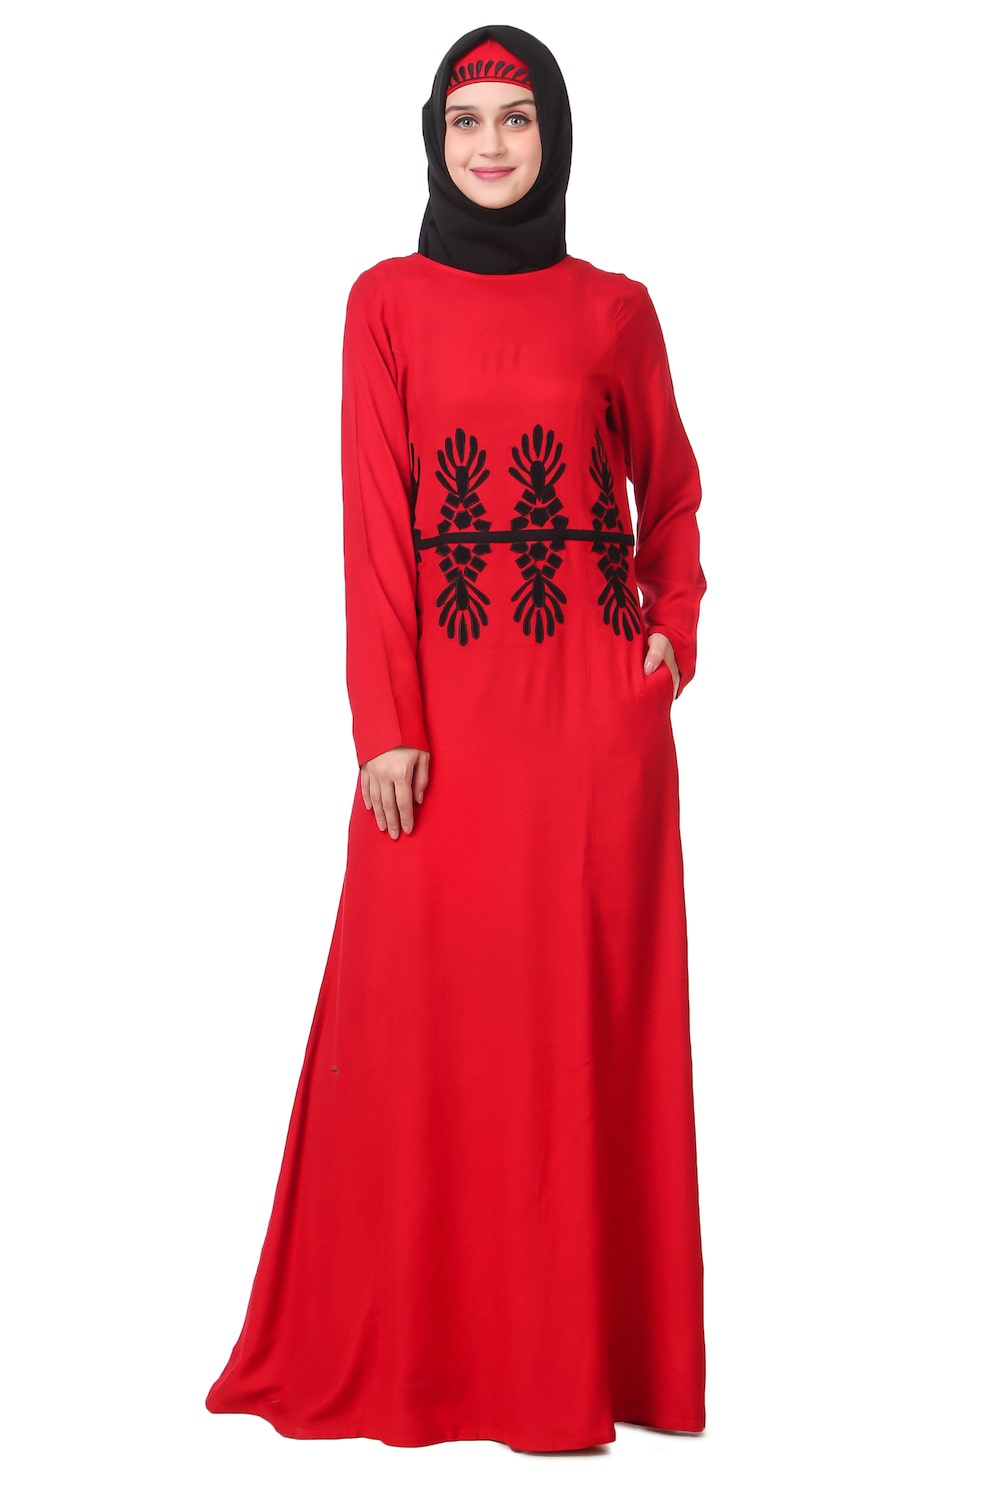 Graphic Pattern Embellished Red Rayon Abaya